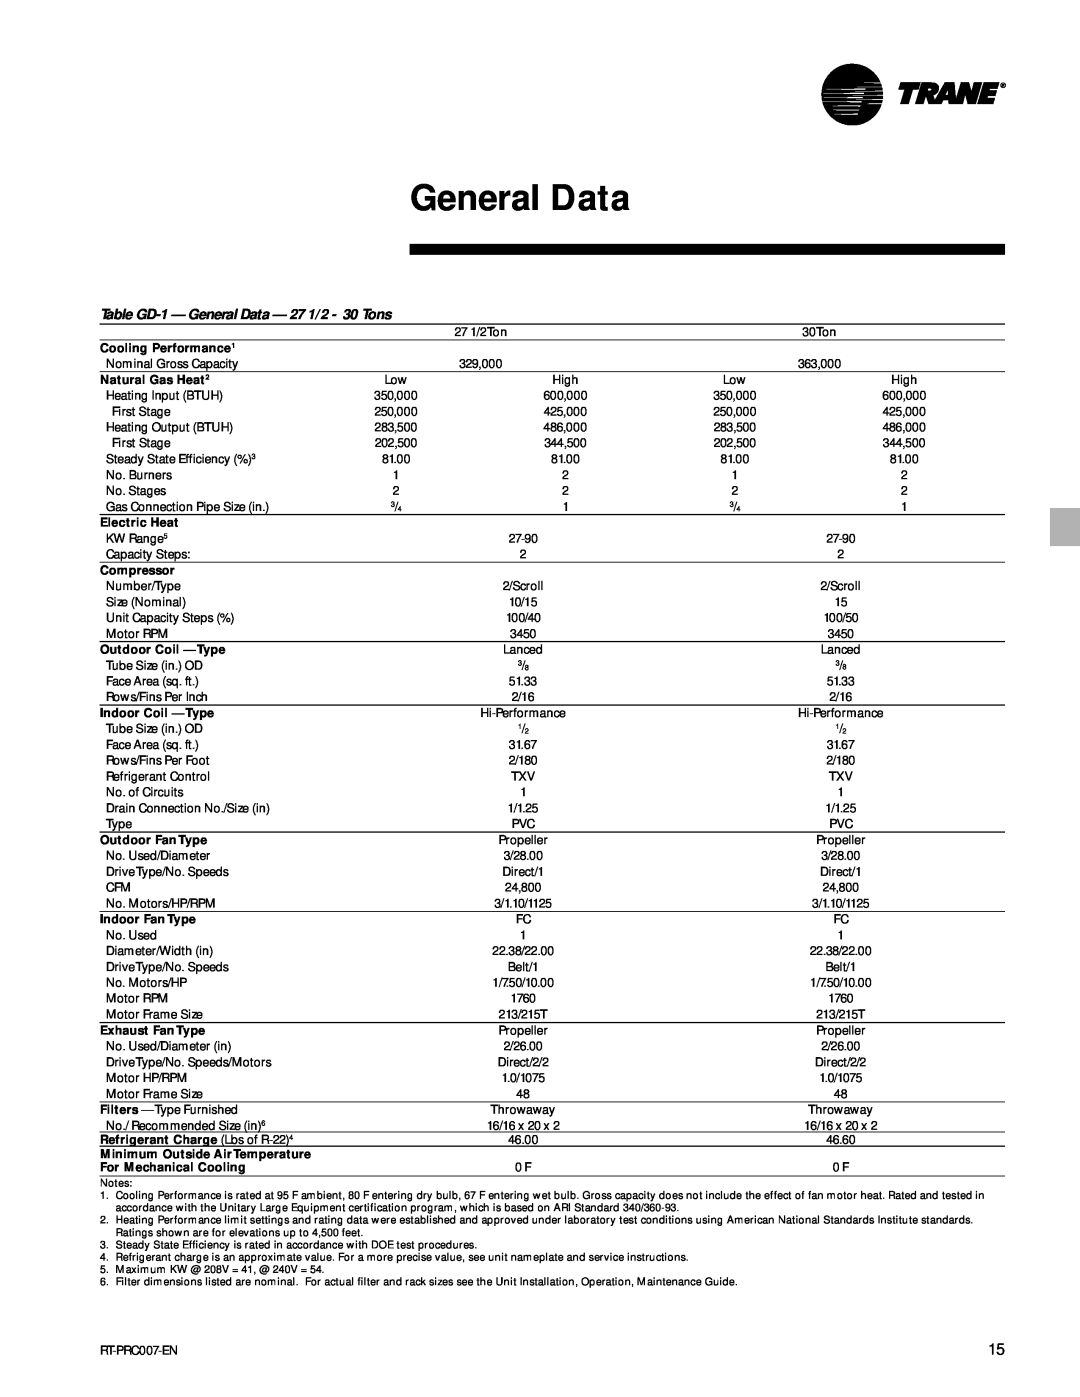 Trane RT-PRC007-EN manual Table GD-1- General Data - 27 1/2 - 30 Tons 